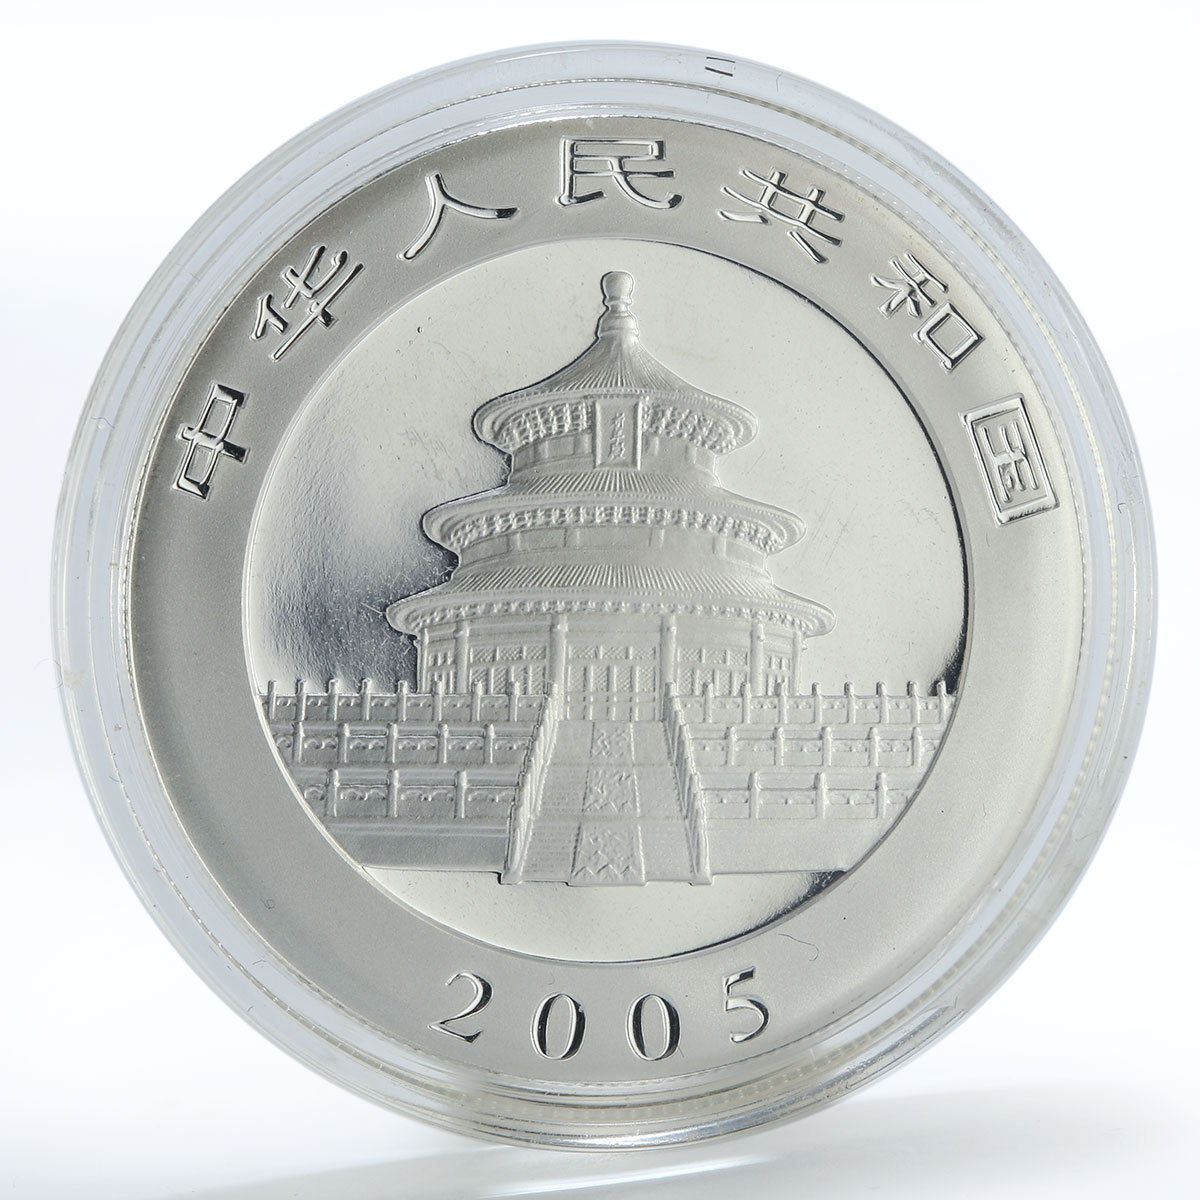 China 10 yuan Panda Series family proof gilded silver coin 2005